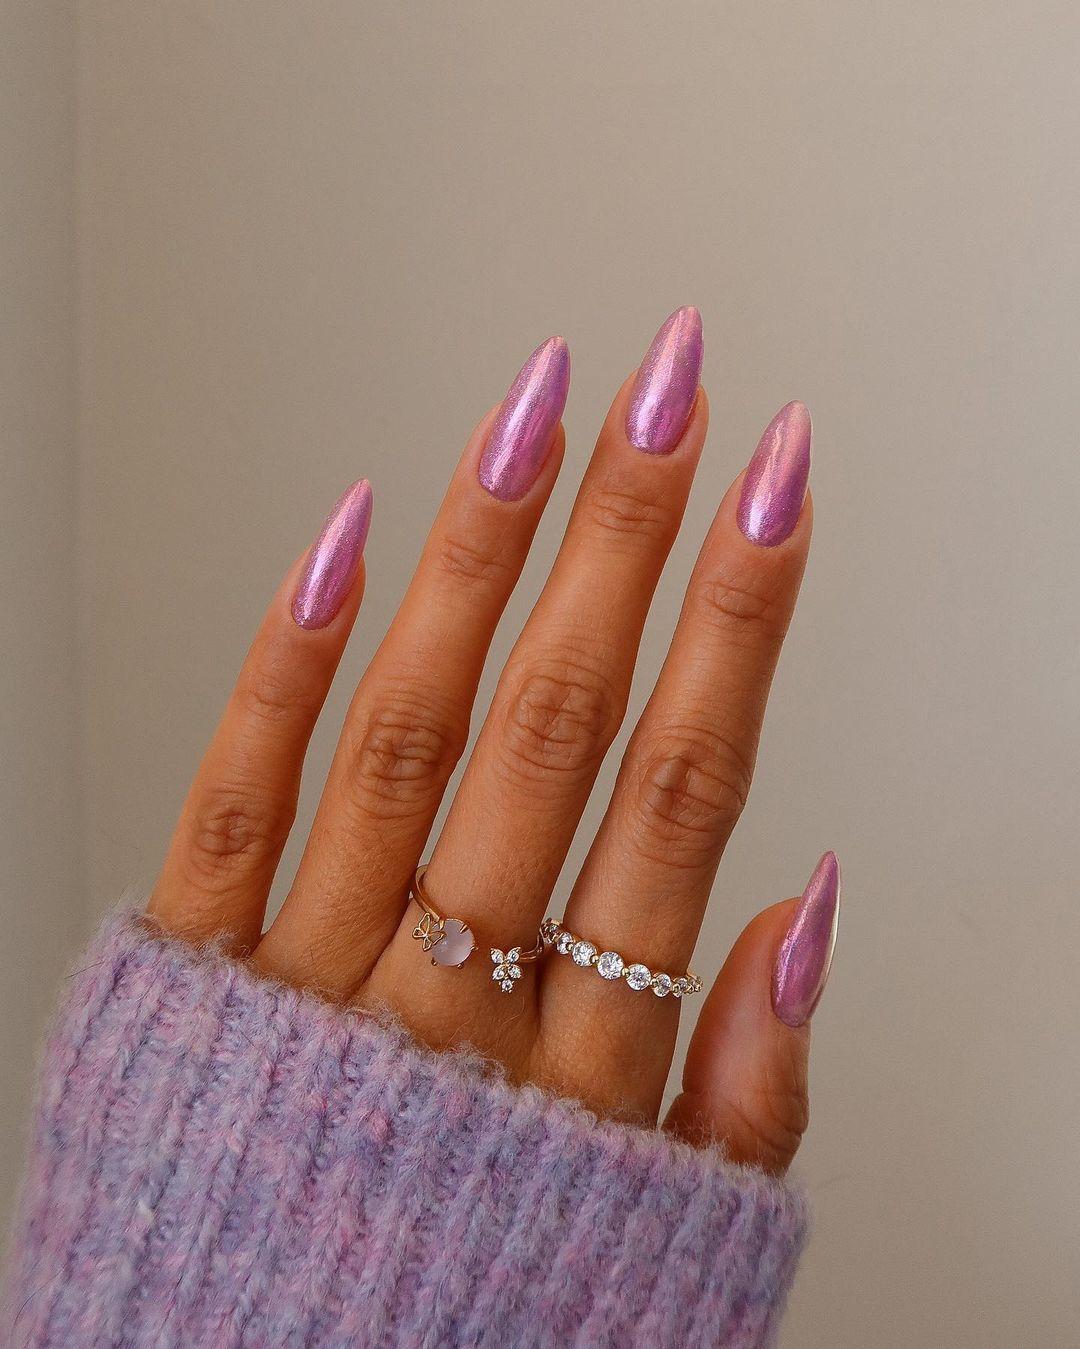 Pink chrome and nail art